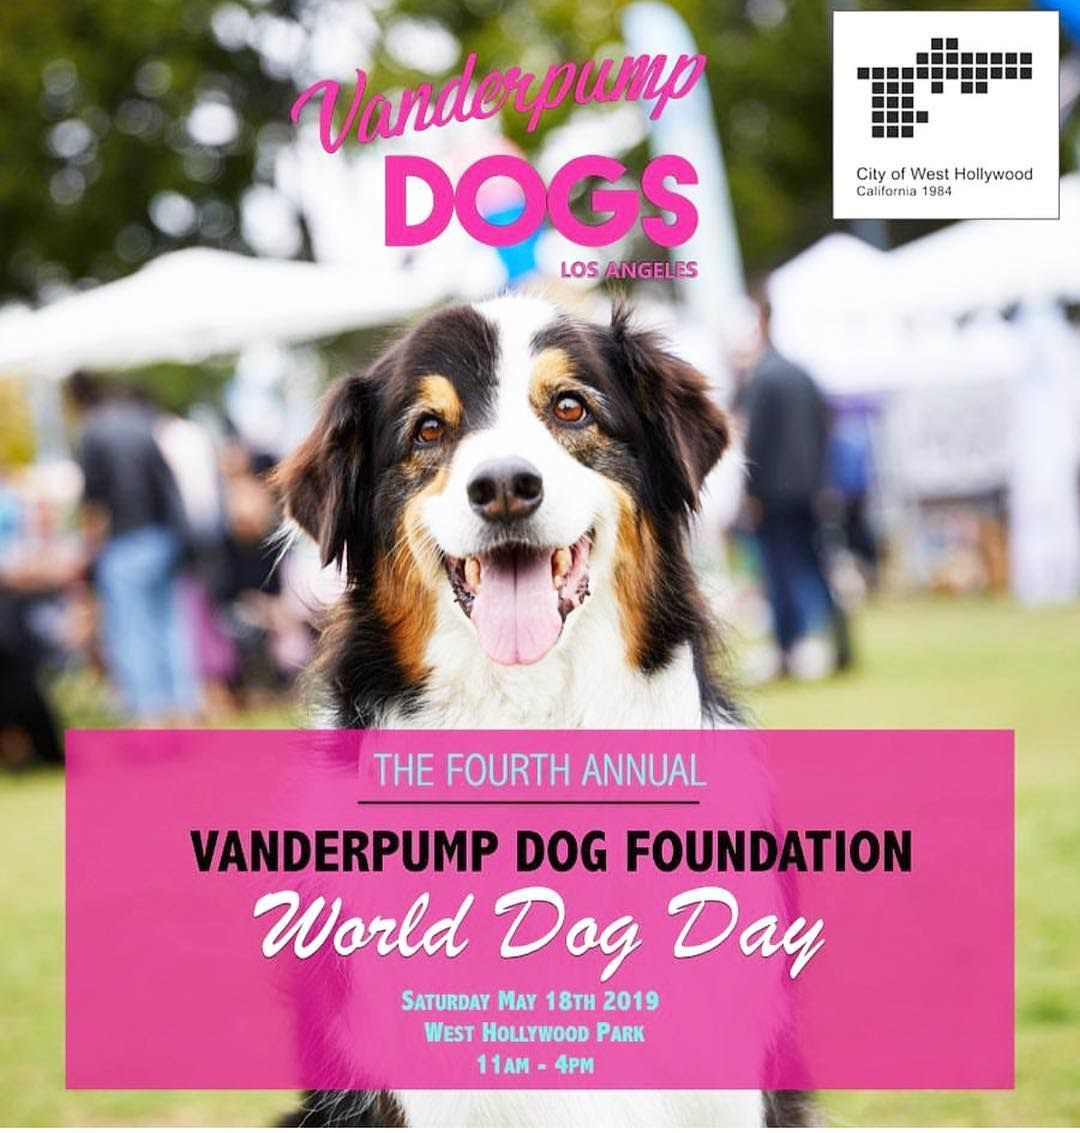 4th Annual World Dog Day - Vanderpump Dogs